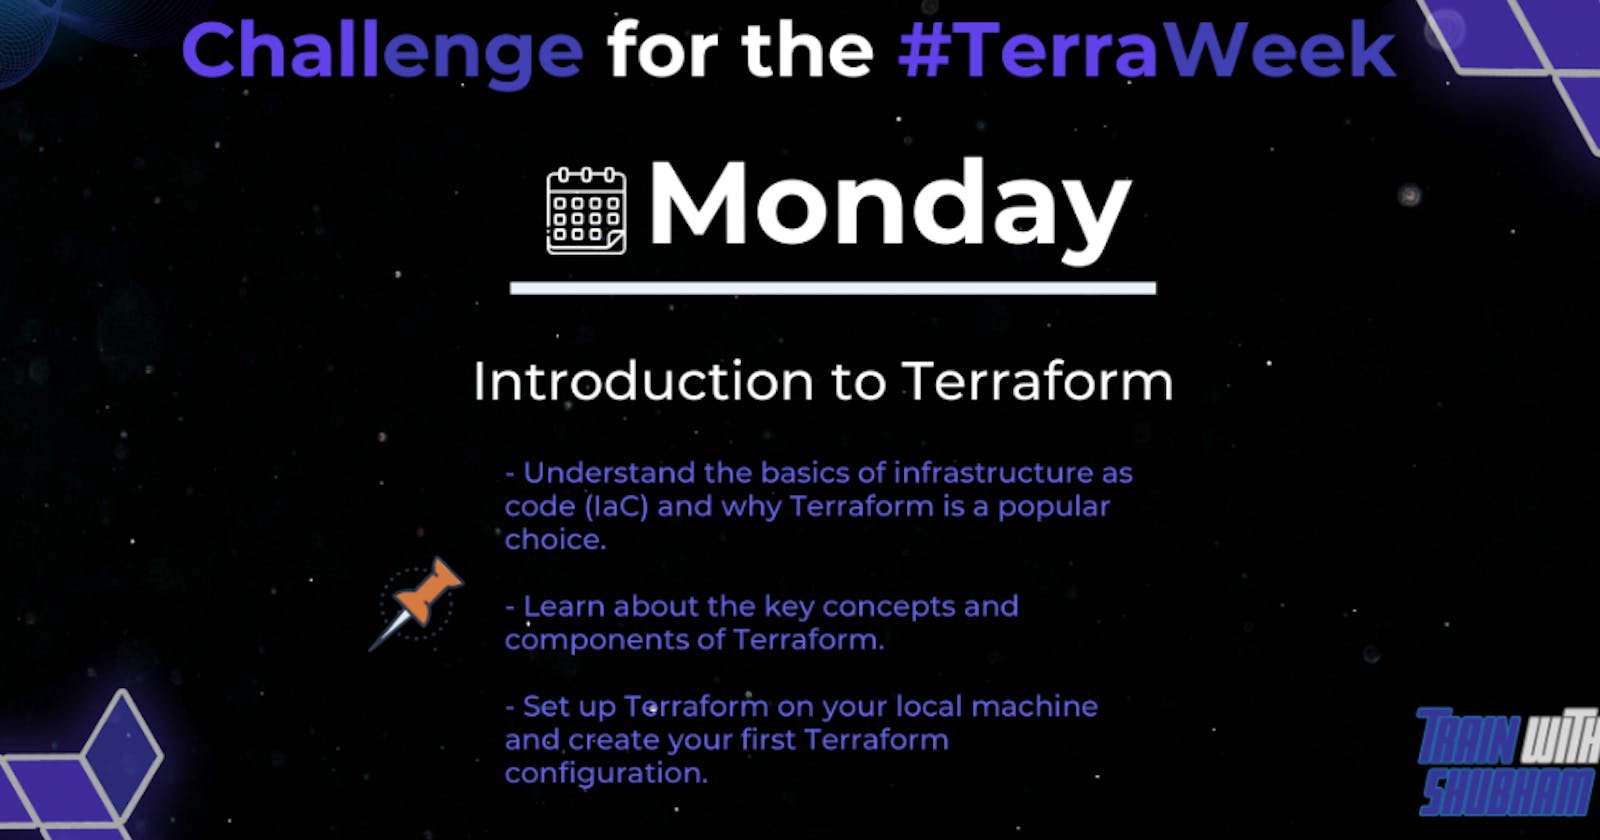 Day 1: Introduction to Terraform and Terraform Basics